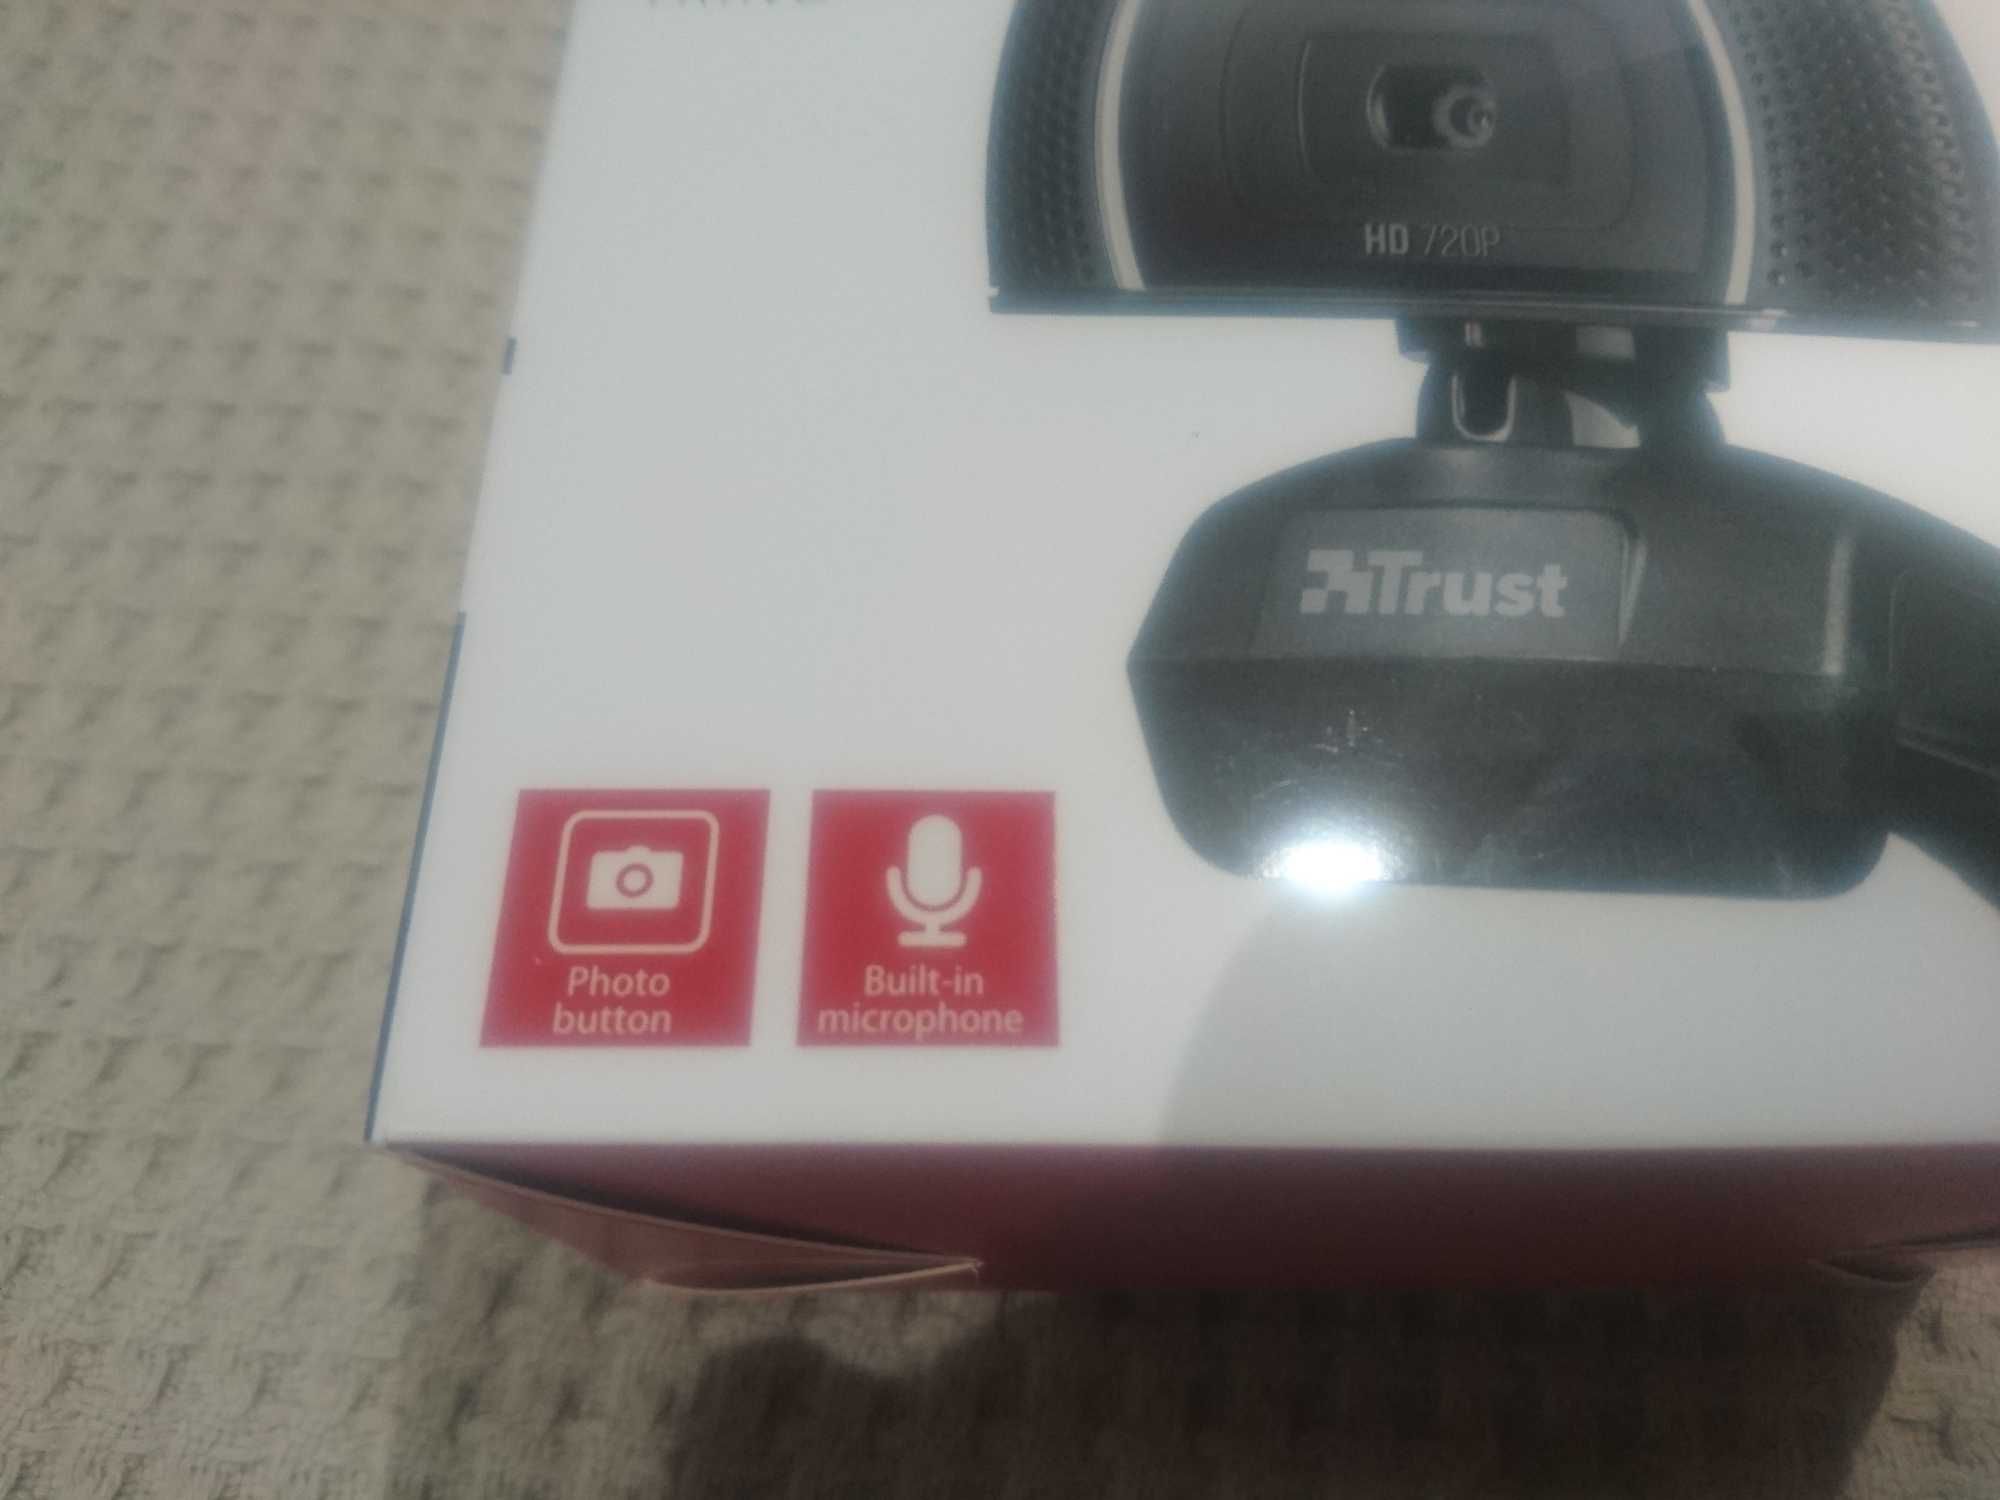 Webcam TRUST Trino (HD - 8 MP - Microfone Incorporado) - Nova - SELADA